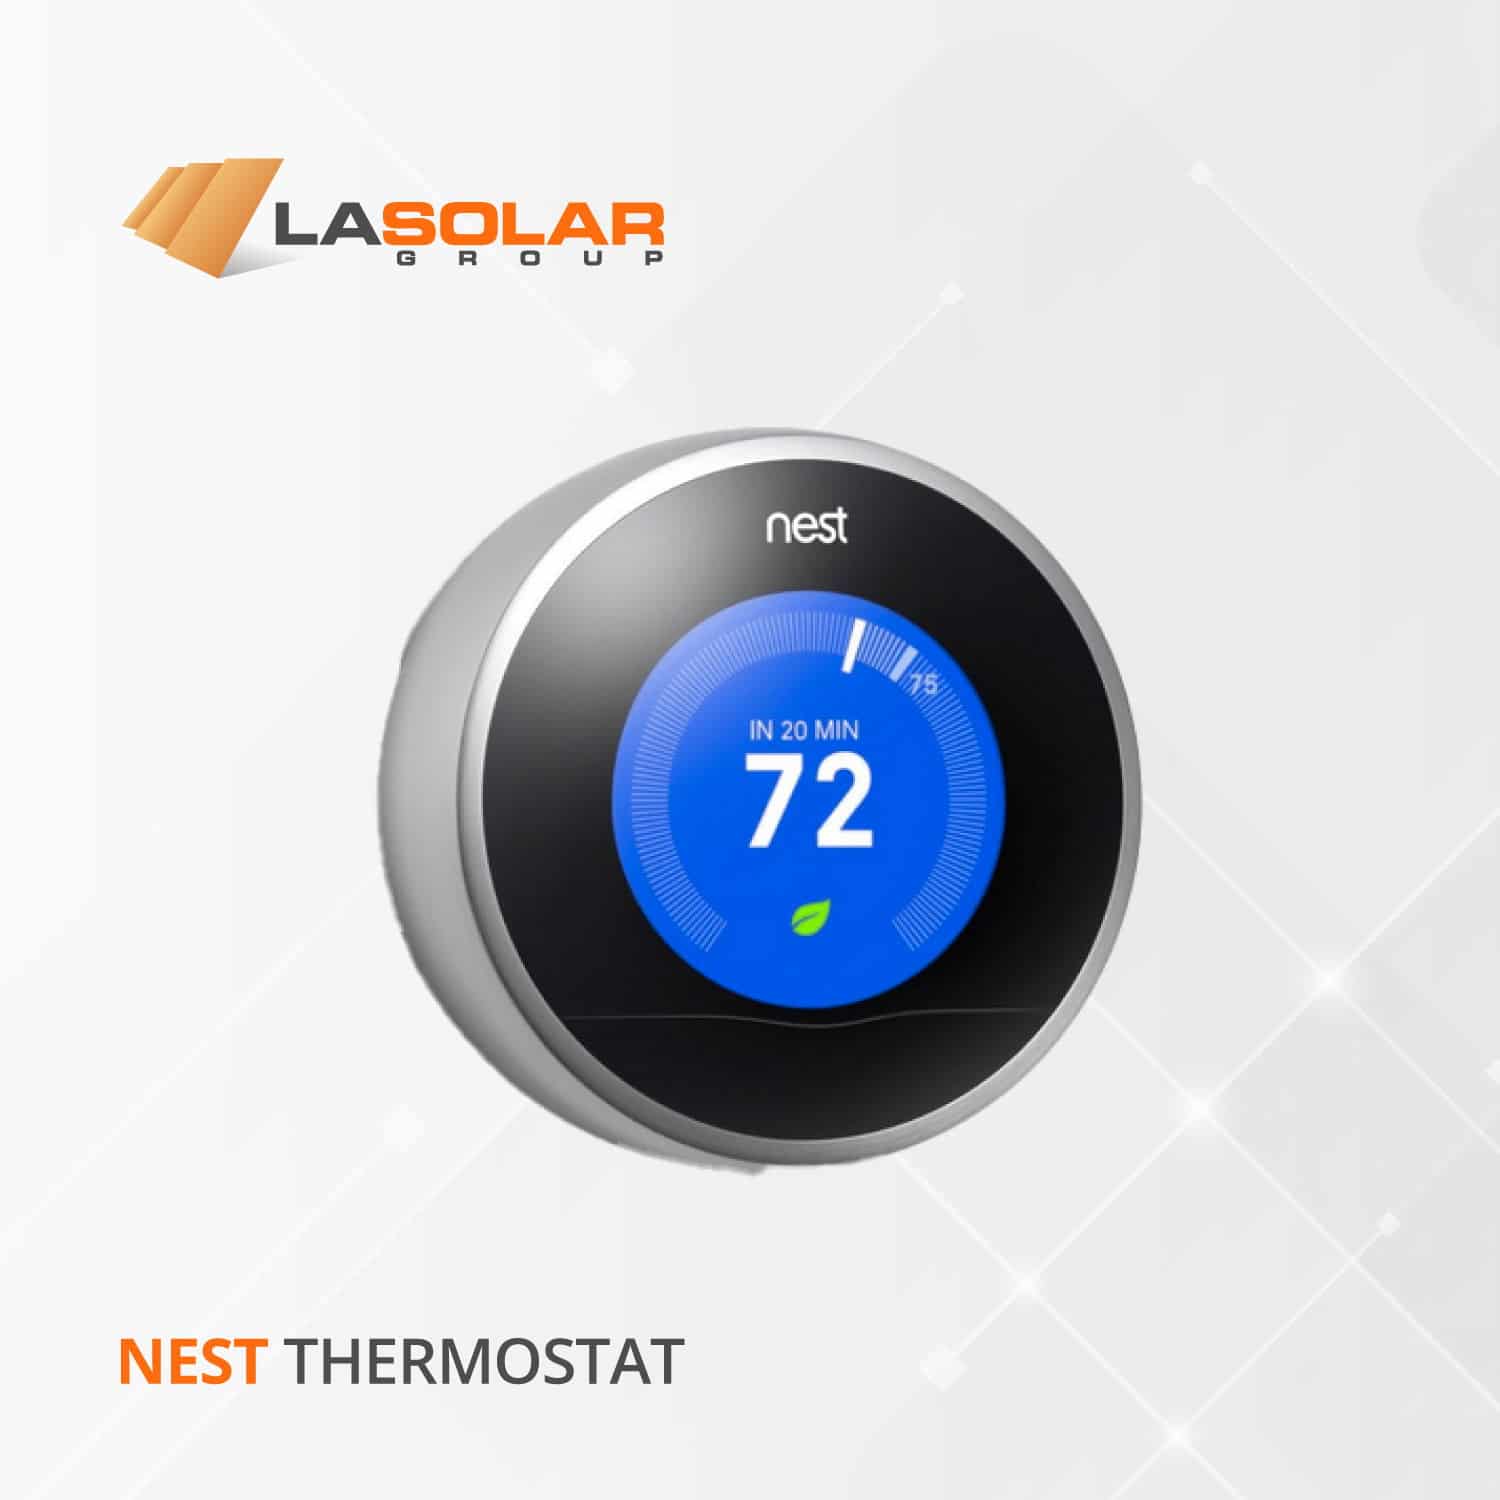 Solar Panel System, Nest Thermostat